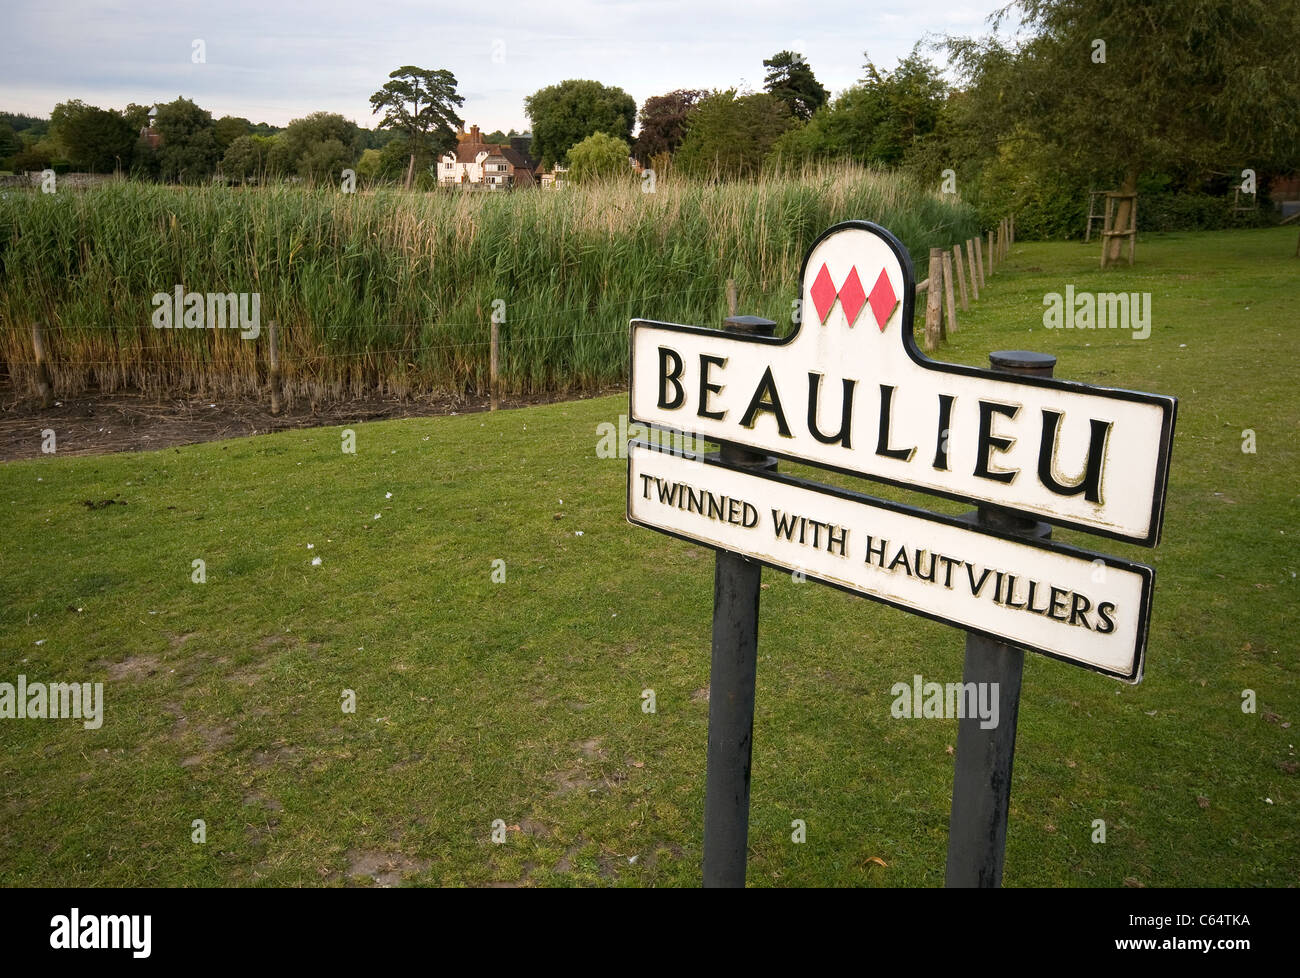 Beaulieu twinned mit Hautvillers Zeichen, Hampshire, England, UK Stockfoto